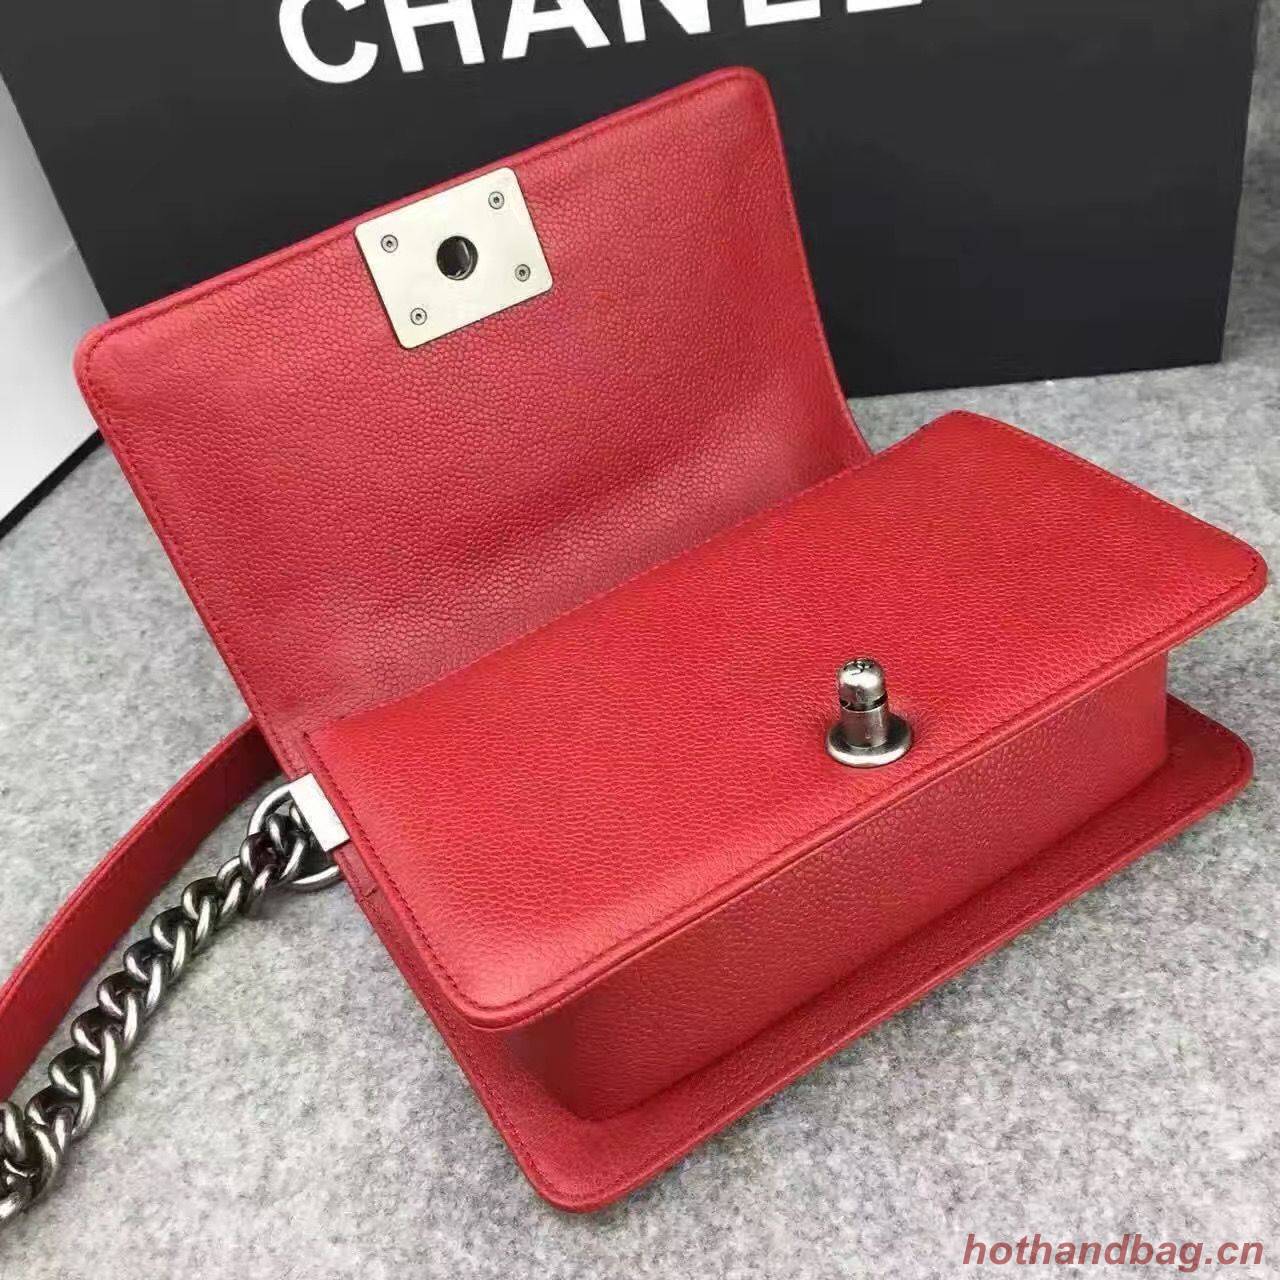 Chanel Le Boy Flap Shoulder Bag Original Cavier Leather A67085 Red Silver Buckle